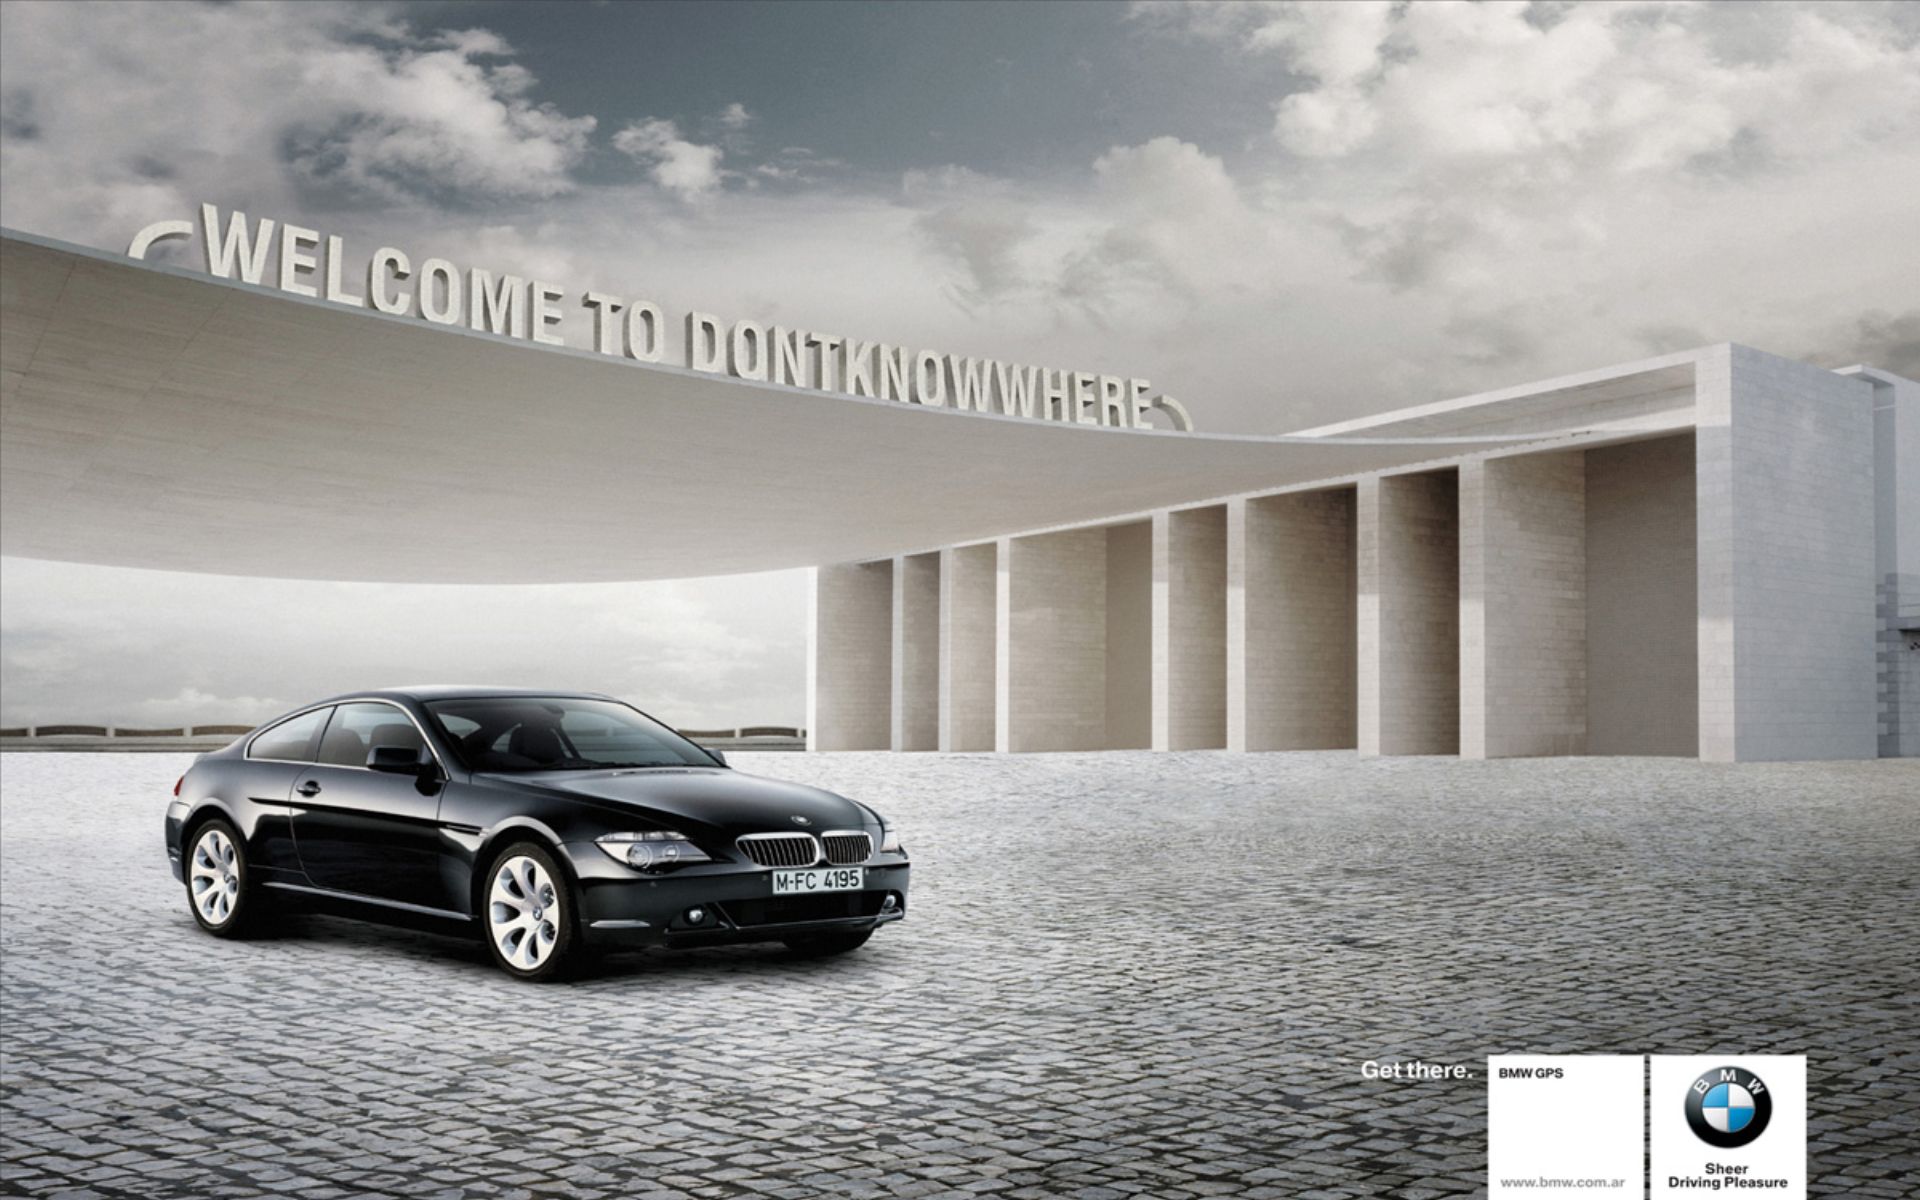 Реклама с бутусовым автомобиль. Реклама на машине. Креативная реклама BMW. Реклама автомобиля BMW. Креативная реклама автомобилей BMW.